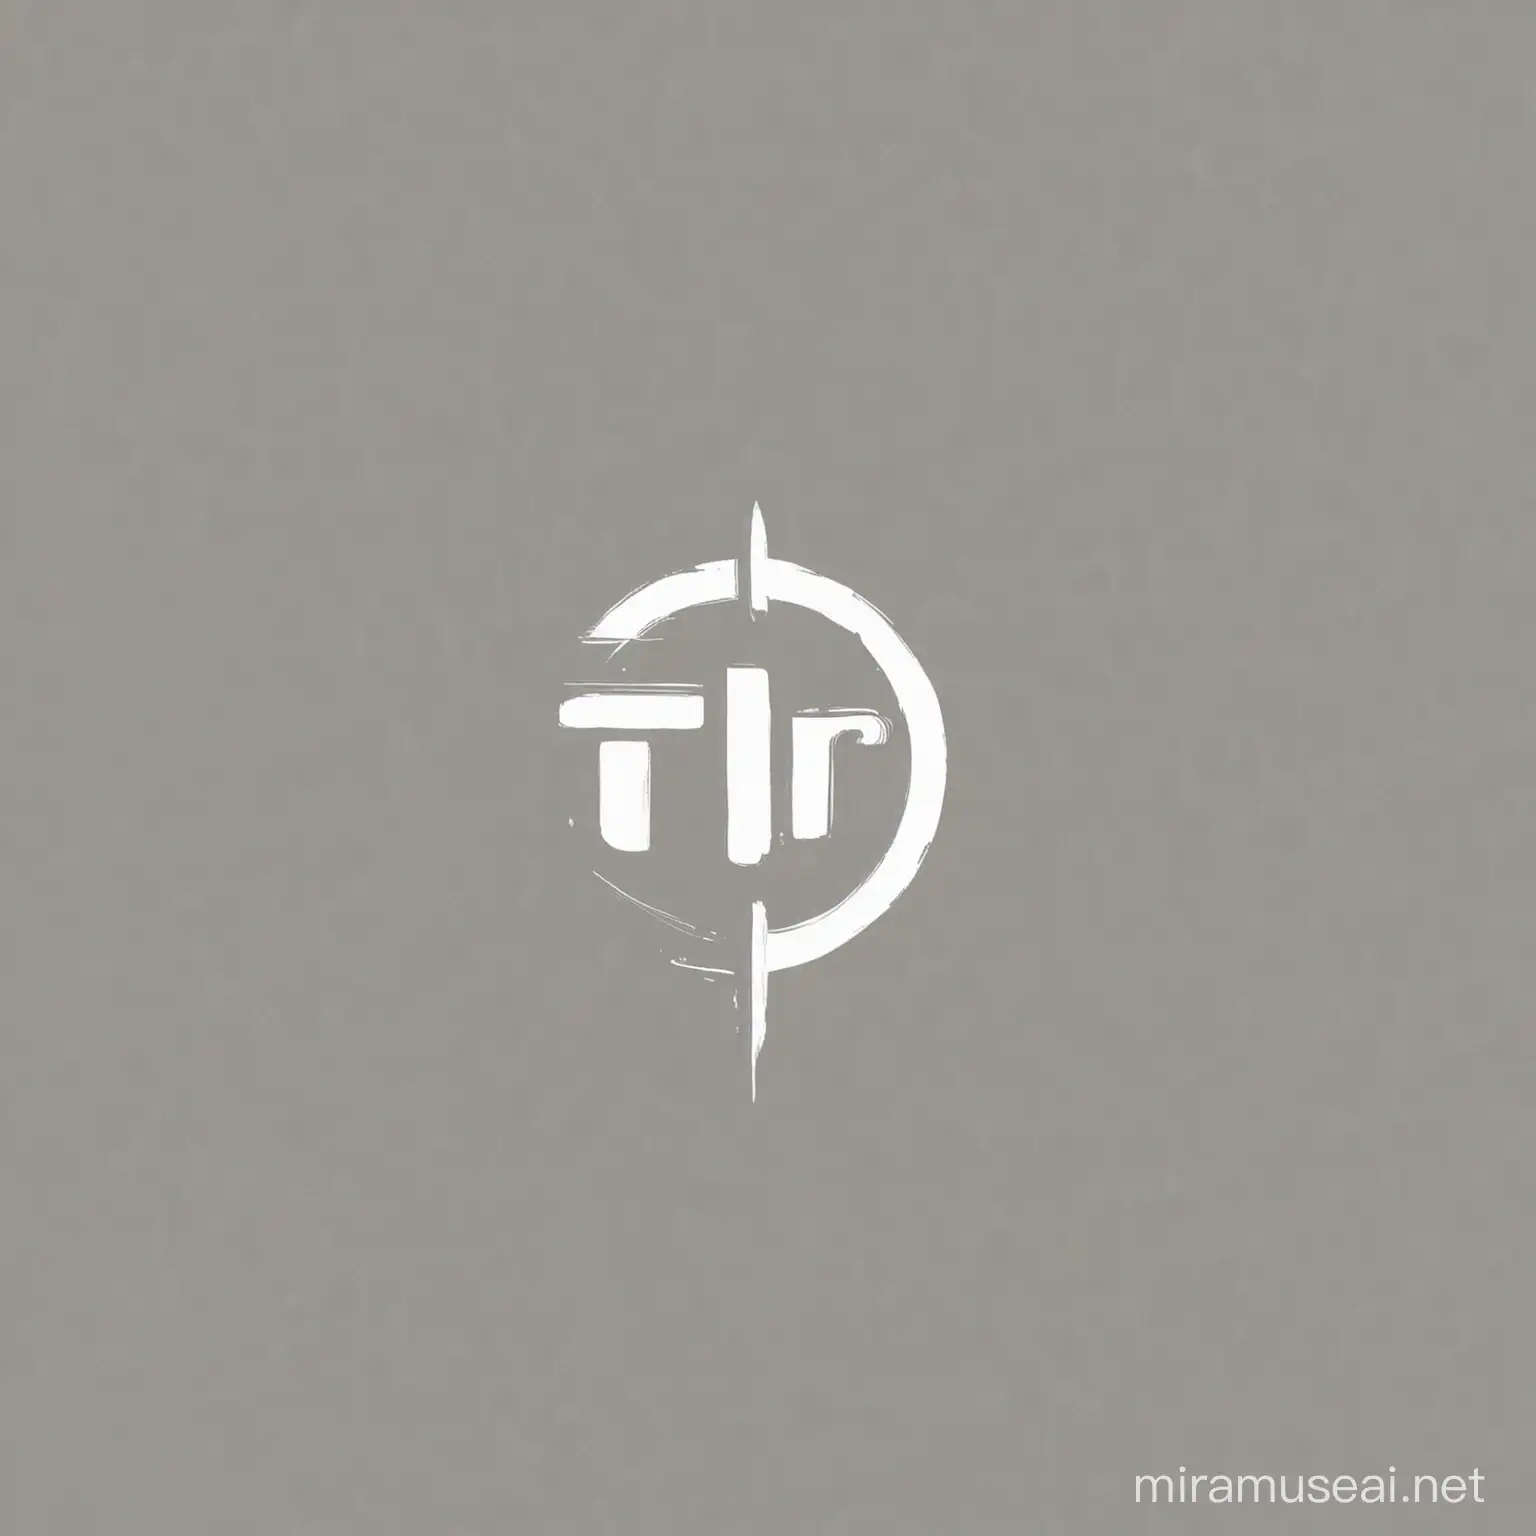 Design me a minimalist logo for my company called Tiran